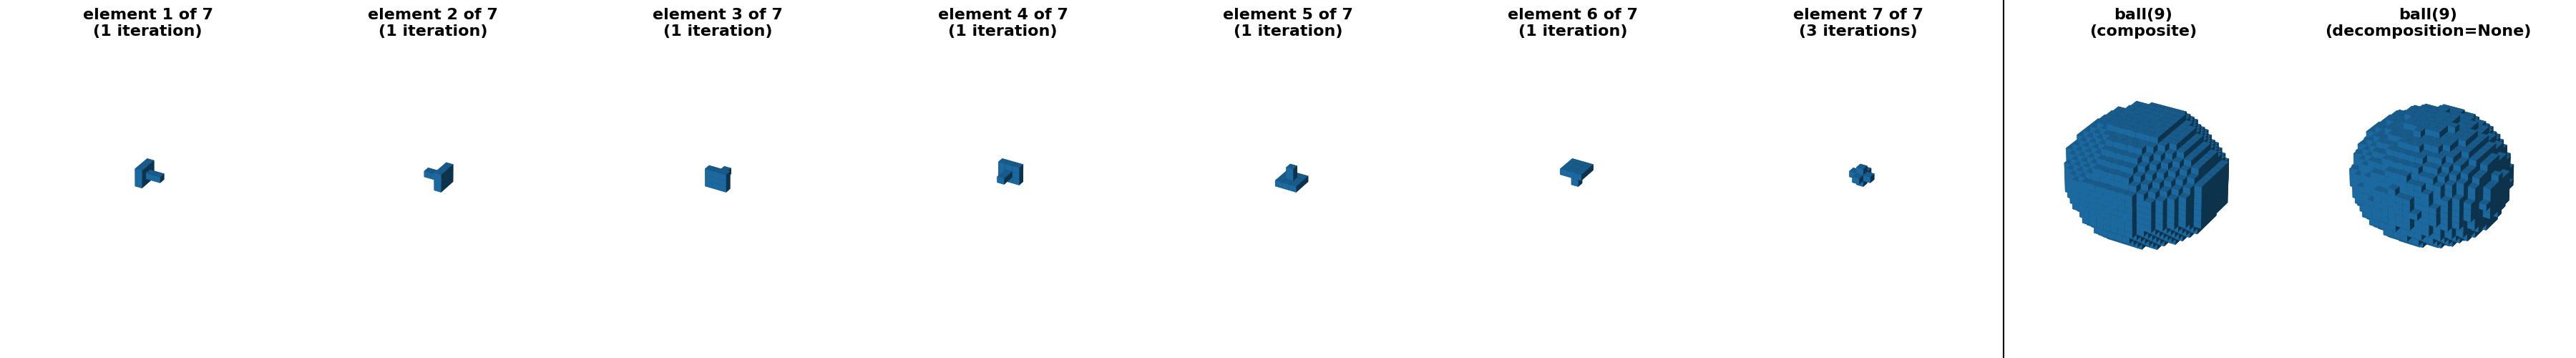 ball(9) (decomposition=None), ball(9) (composite), element 1 of 7 (1 iteration), element 2 of 7 (1 iteration), element 3 of 7 (1 iteration), element 4 of 7 (1 iteration), element 5 of 7 (1 iteration), element 6 of 7 (1 iteration), element 7 of 7 (3 iterations)